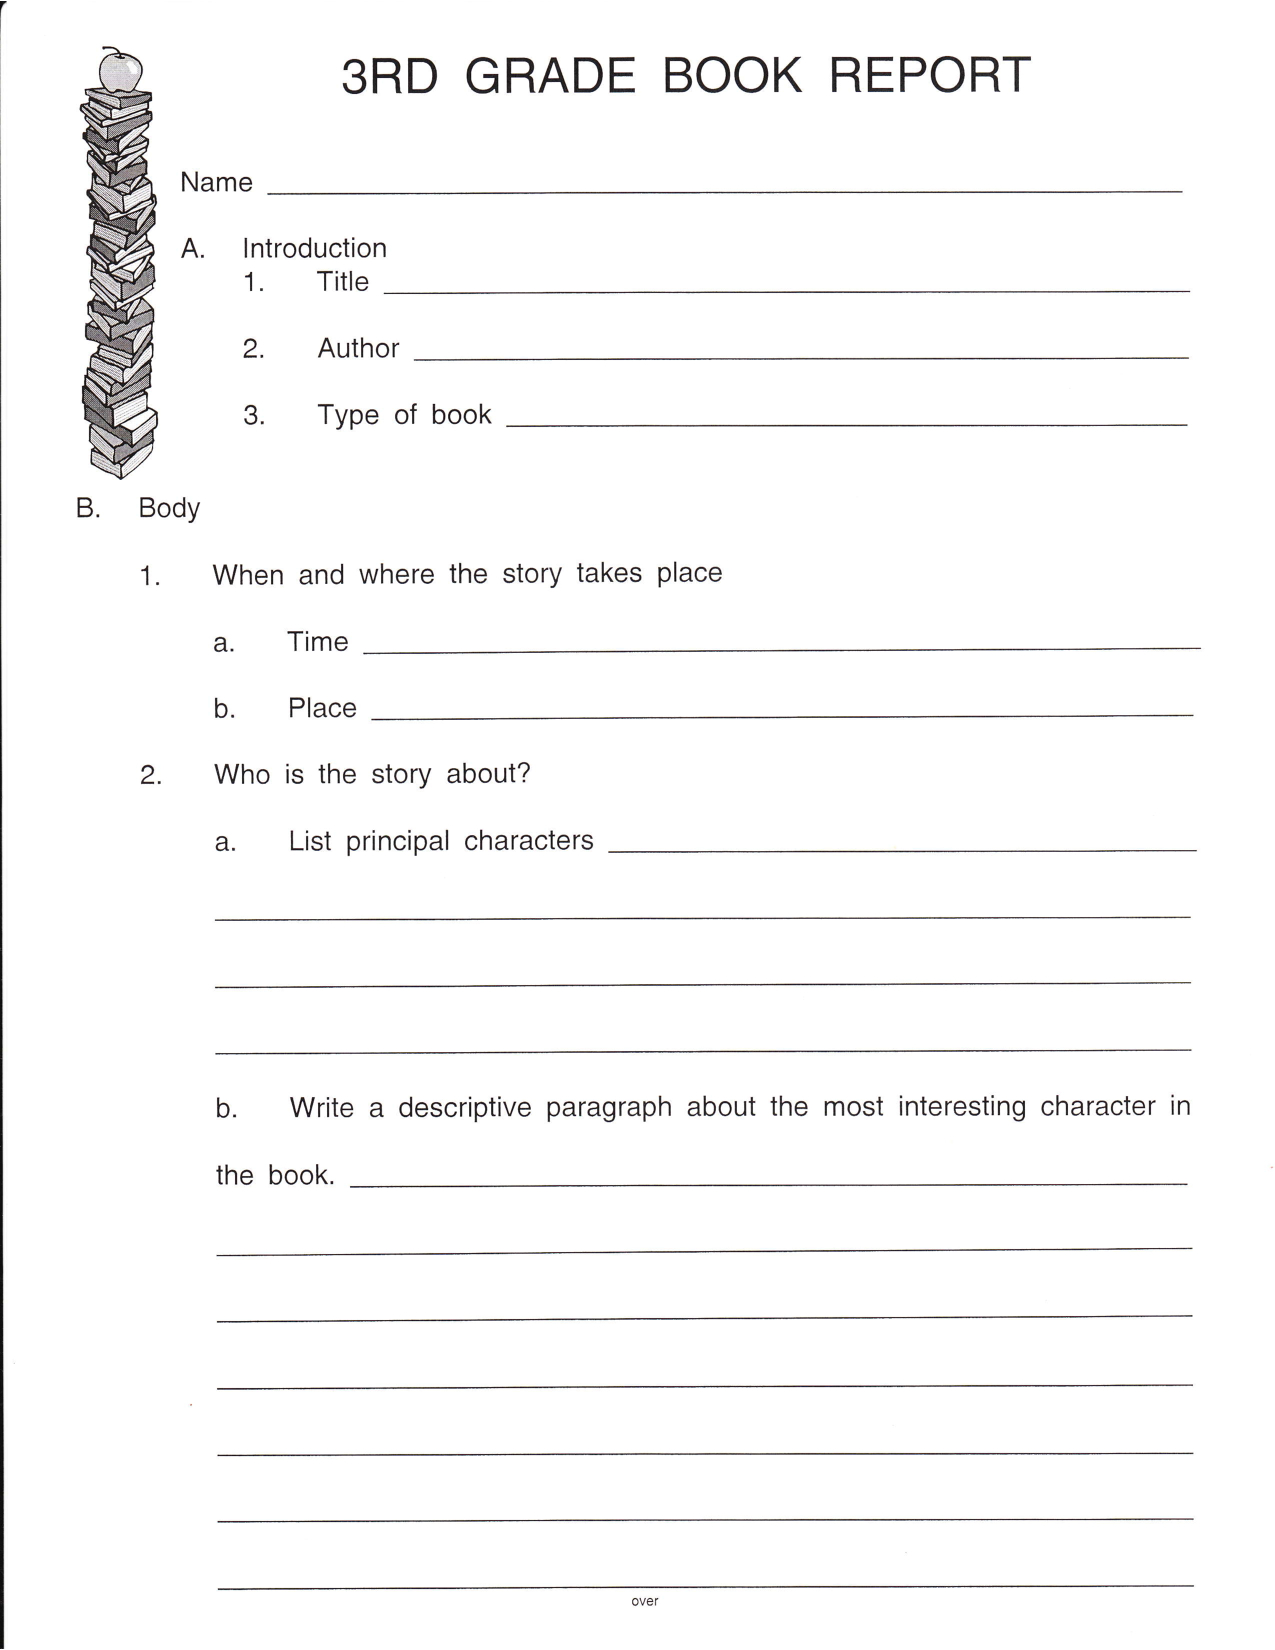 Second Grade Book Report Template | Scope Of Work Template Throughout Second Grade Book Report Template